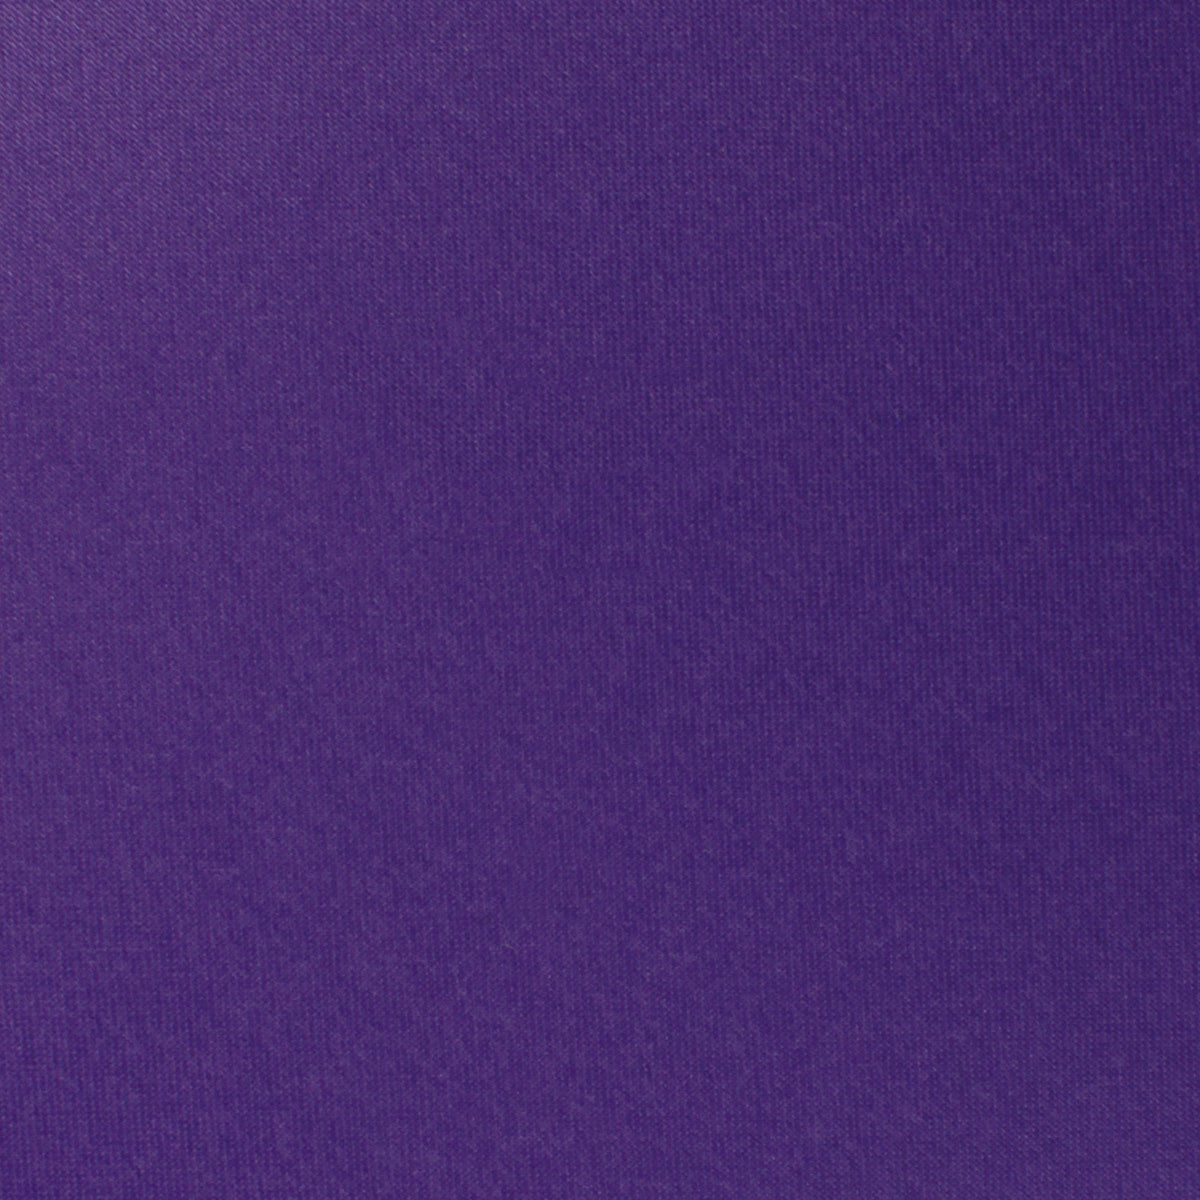 Royal Violet Purple Satin Bow Tie Fabric